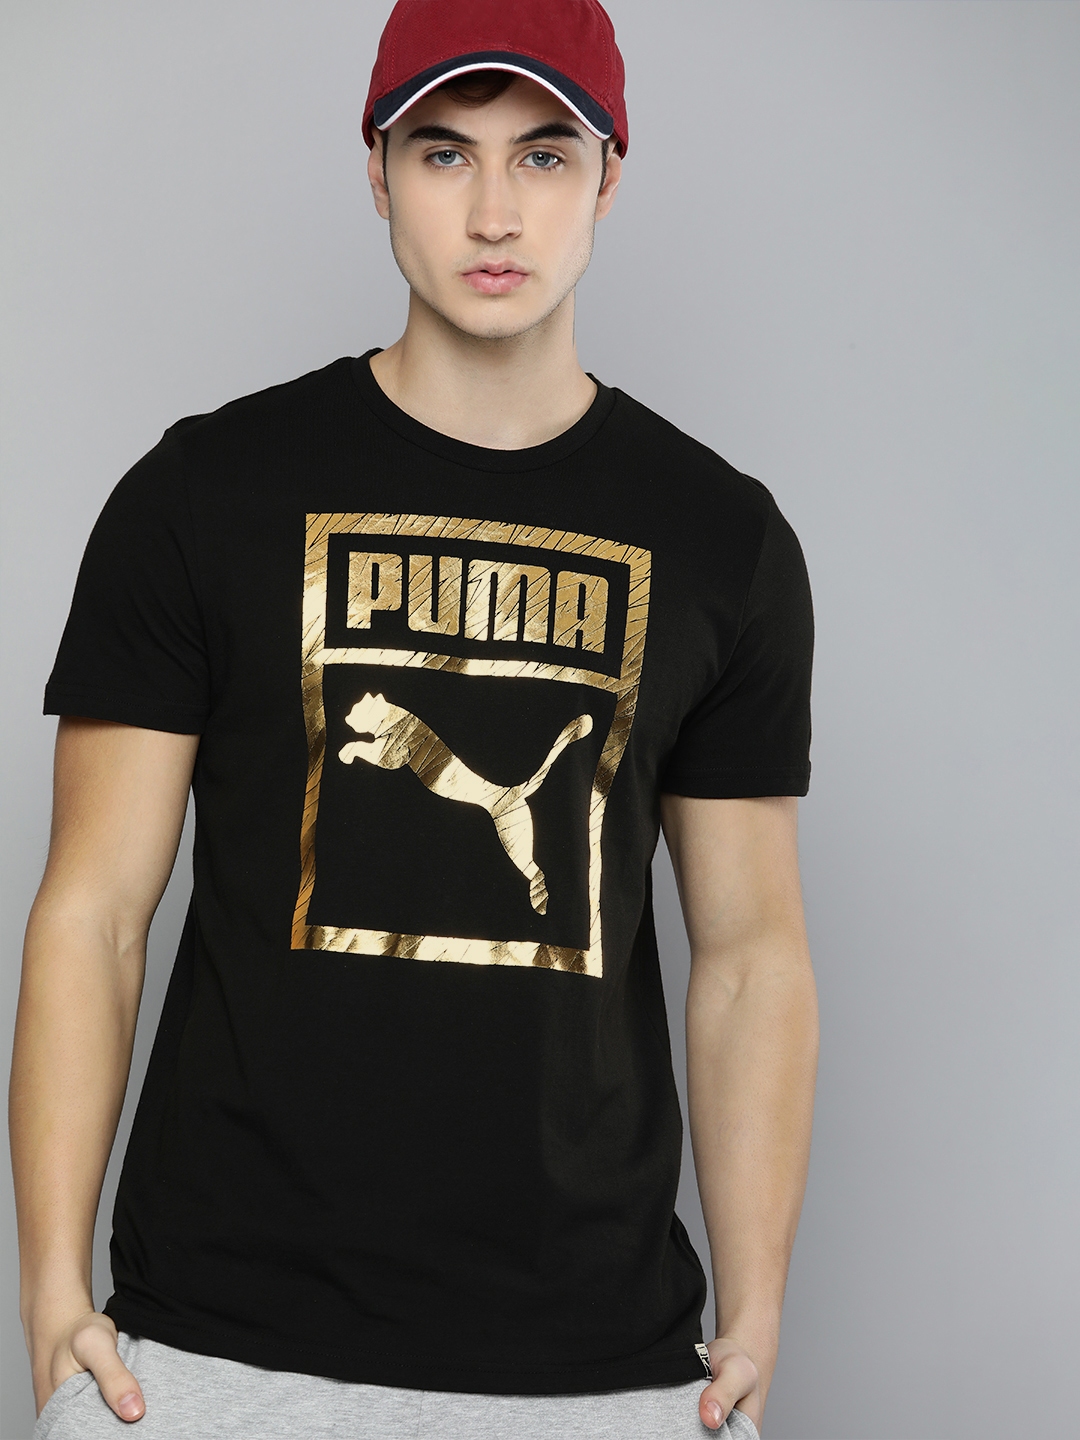 Buy Puma Men Black & Gold Toned Printed T Shirt - Tshirts for Men ...